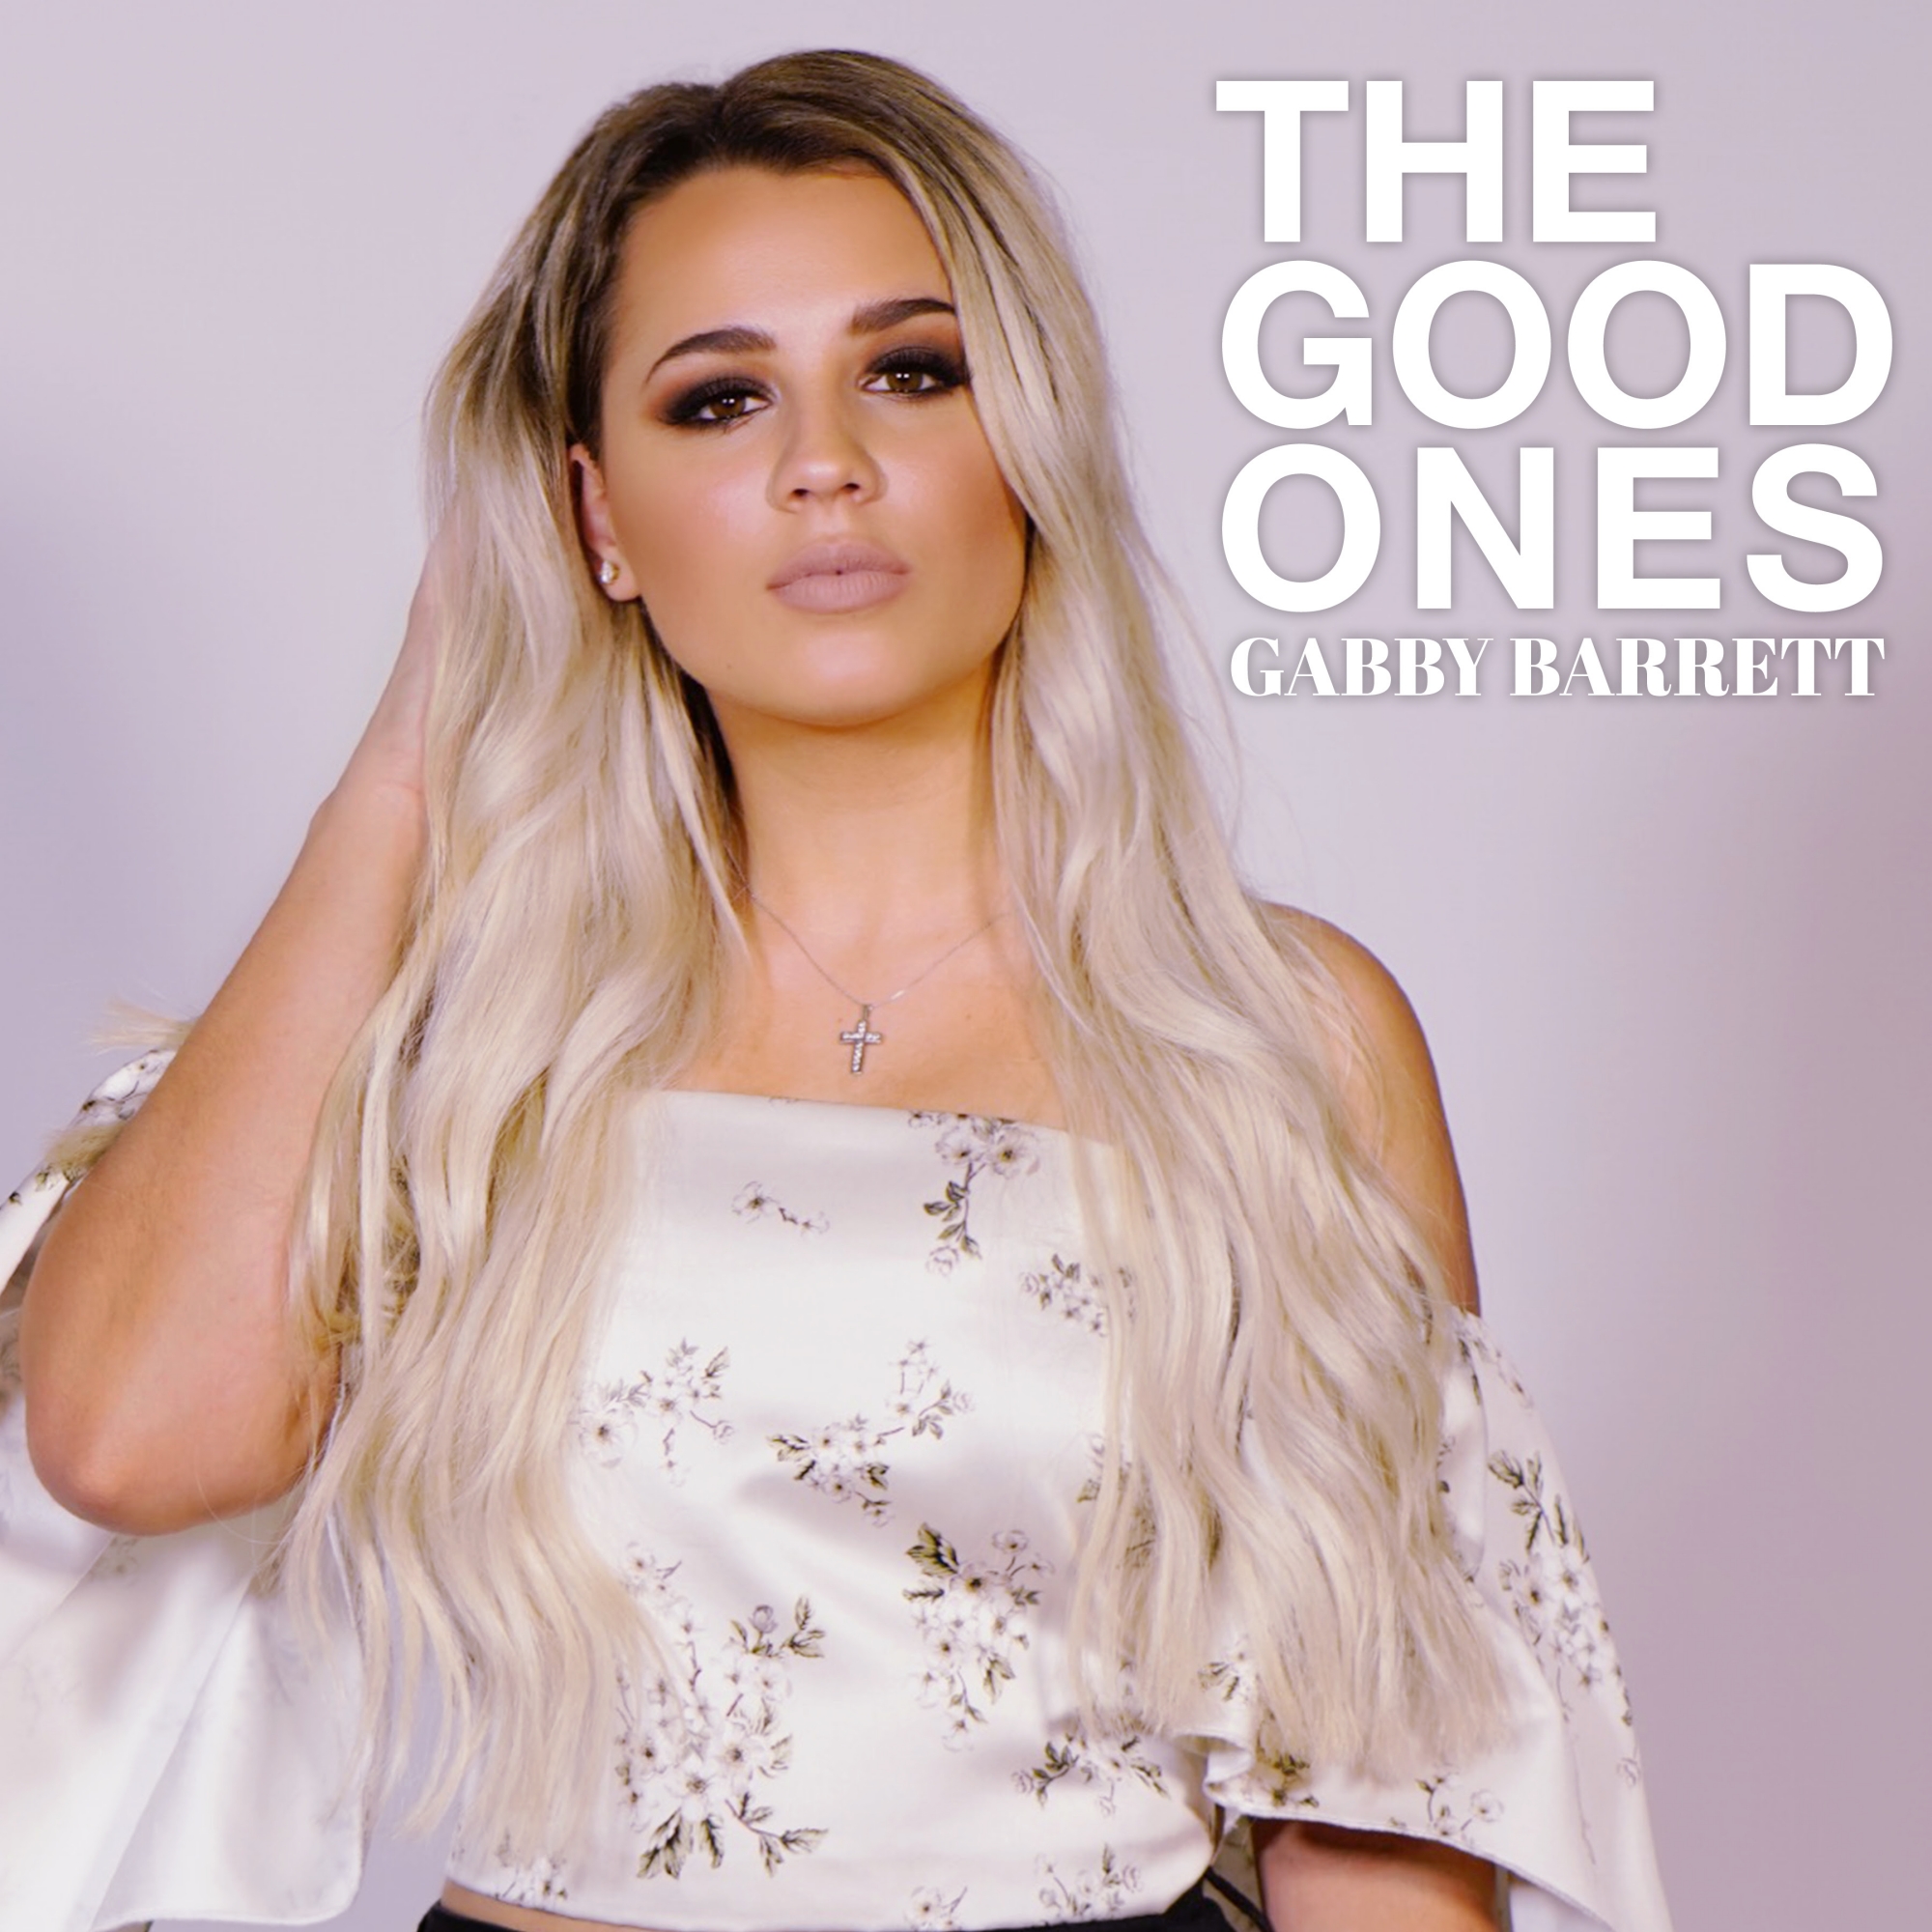 Gabby Barrett - The Good Ones
Released: July 12, 2019 
Label: Warner Music Nashville
